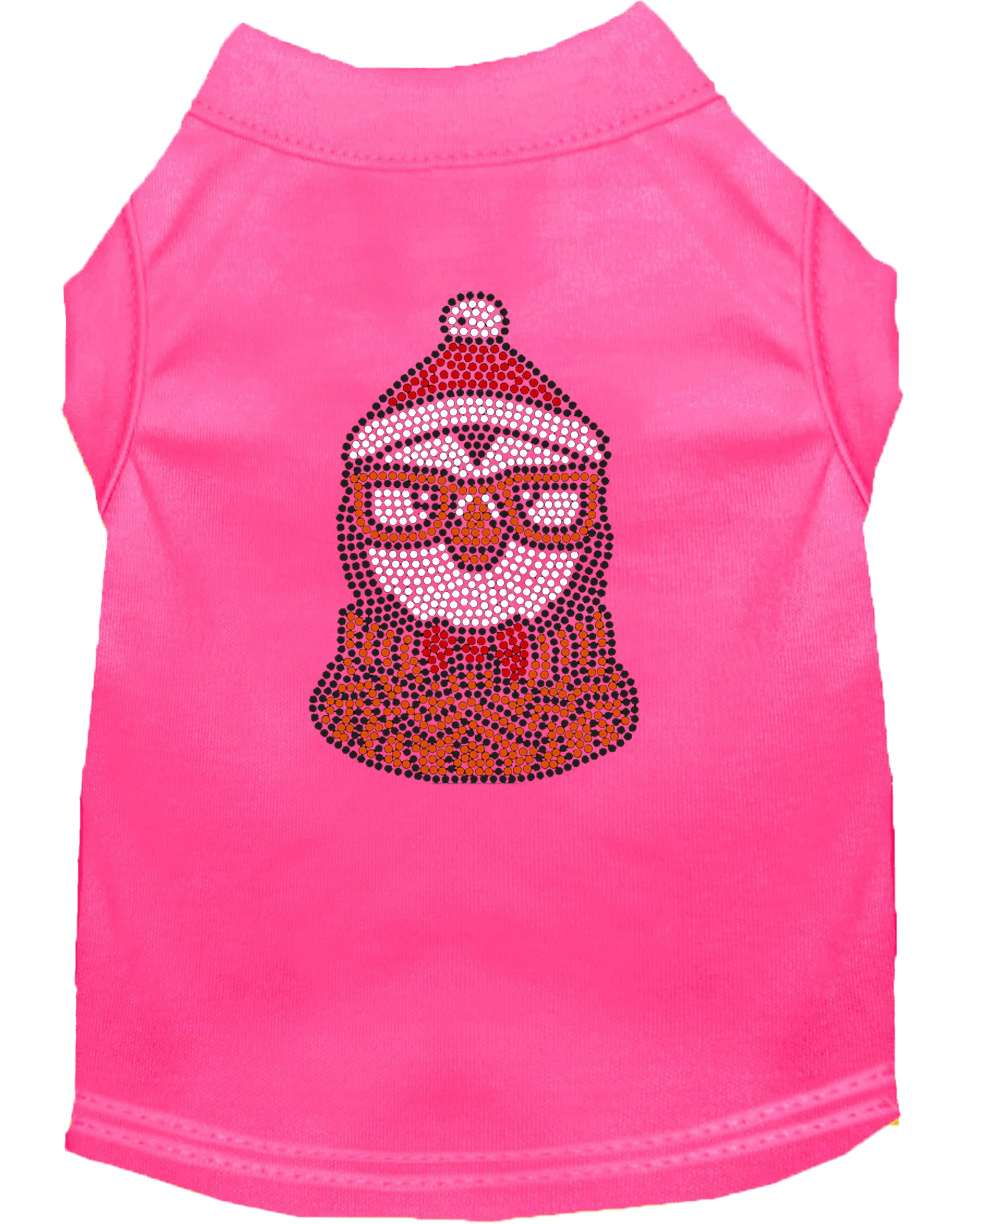 Hipster Penguin Rhinestone Dog Shirt Bright Pink XS